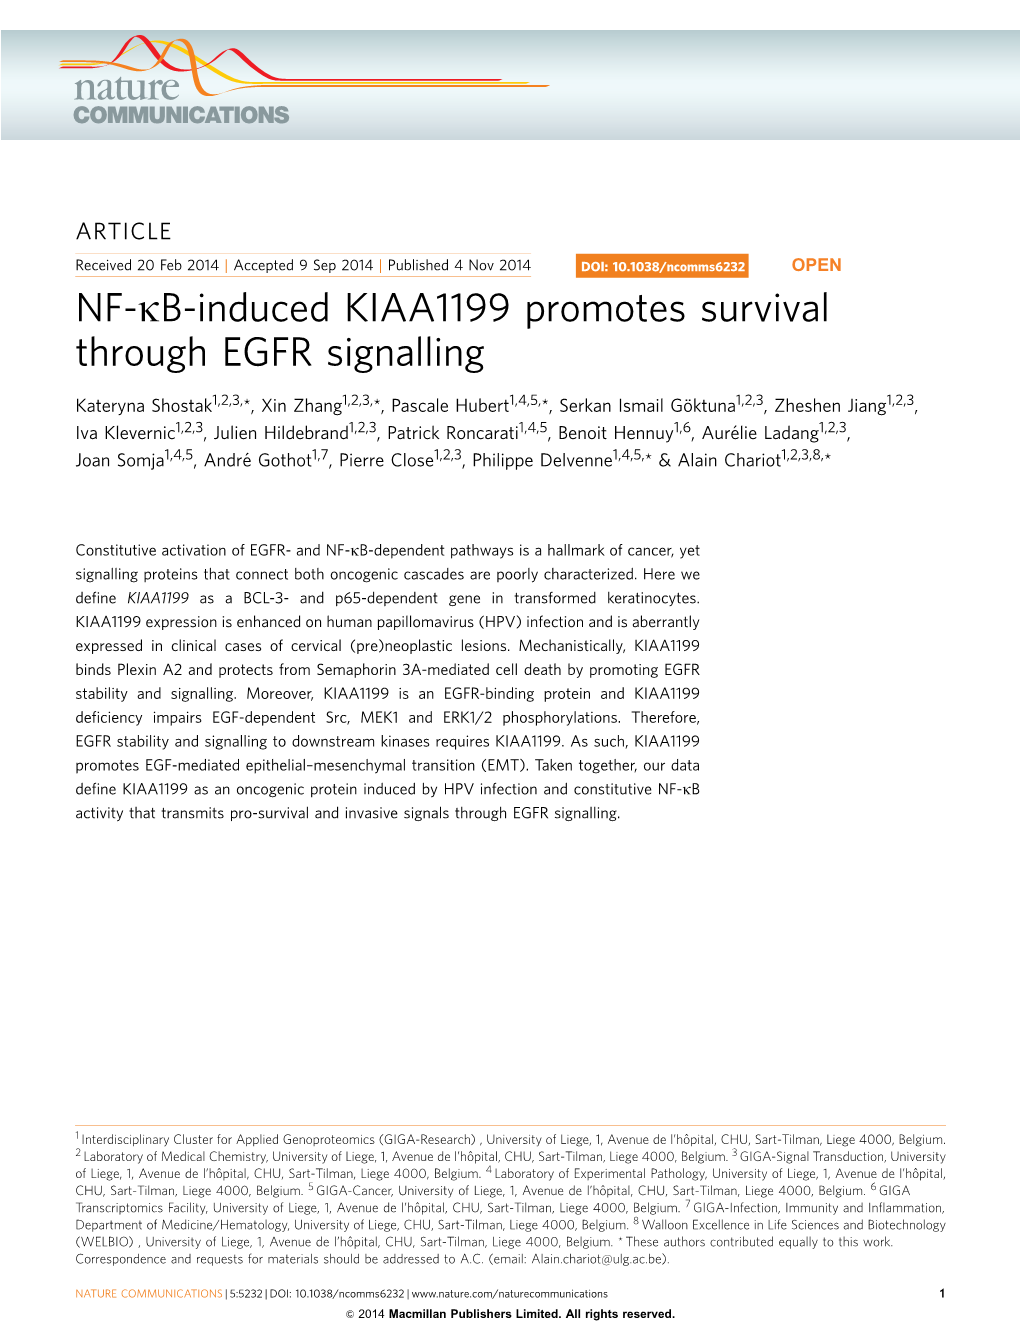 B-Induced KIAA1199 Promotes Survival Through EGFR Signalling